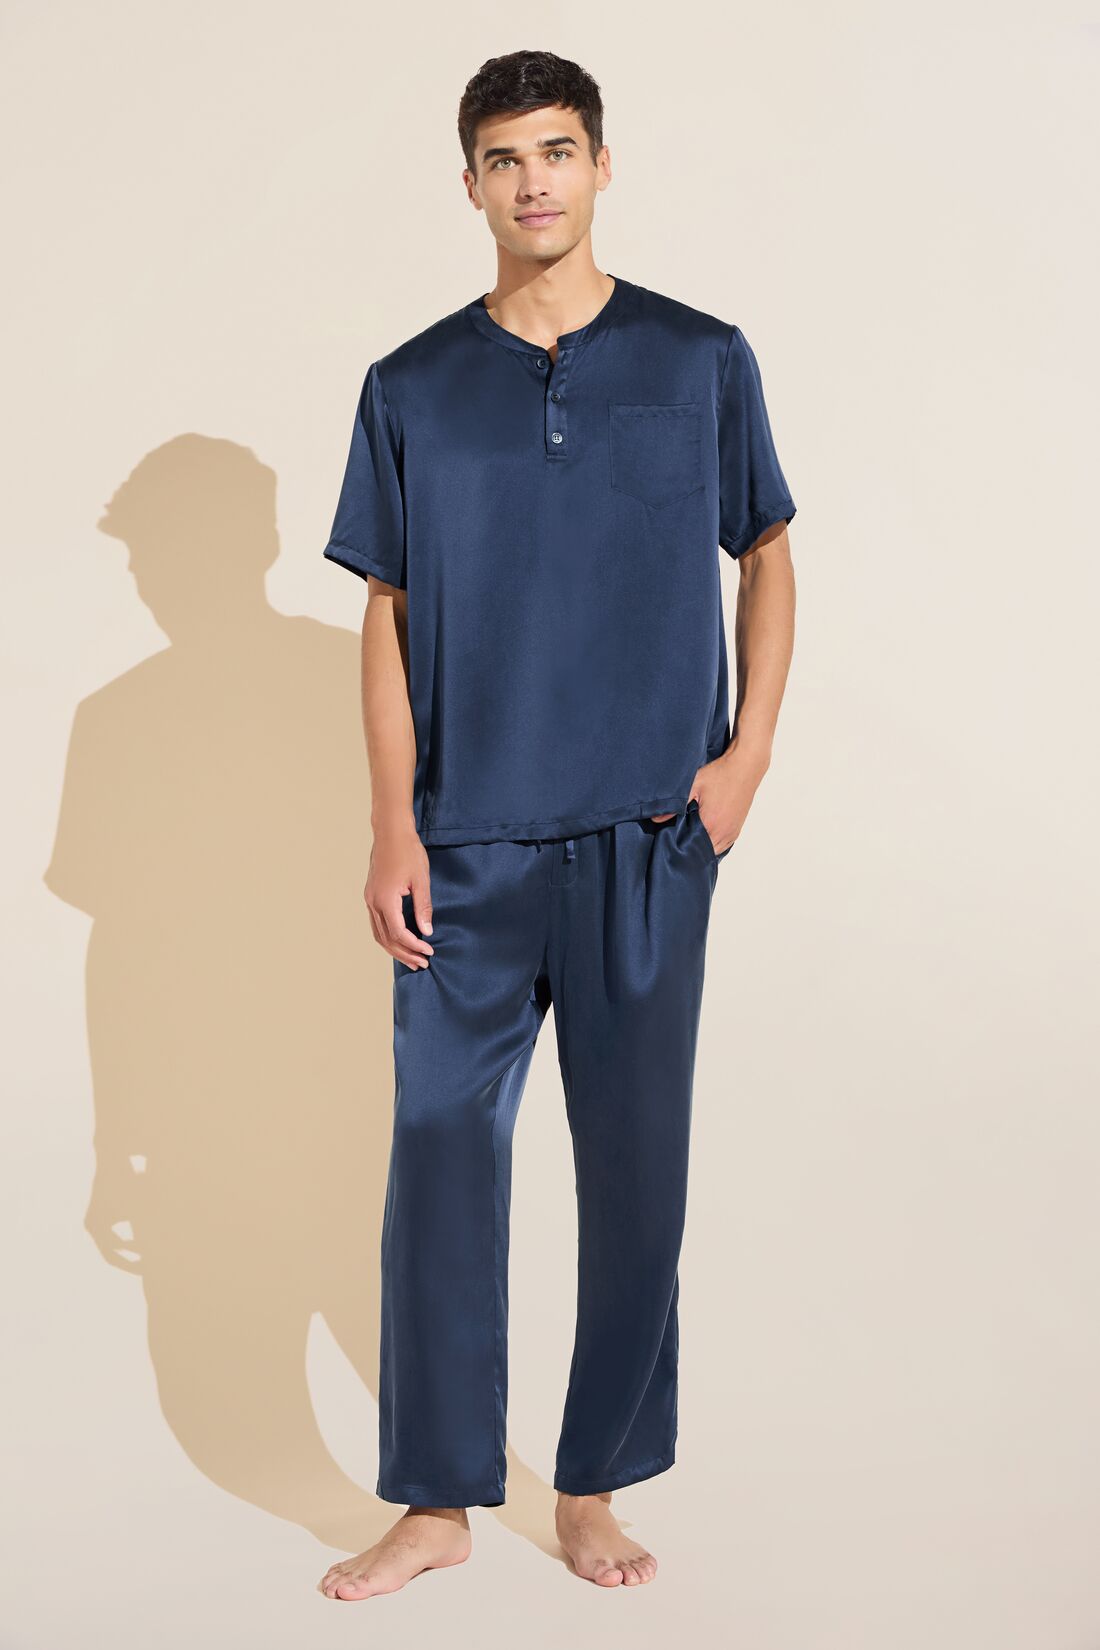 BedHead Pajamas Men's Short Sleeve Notch Collar Boxer PJ Set